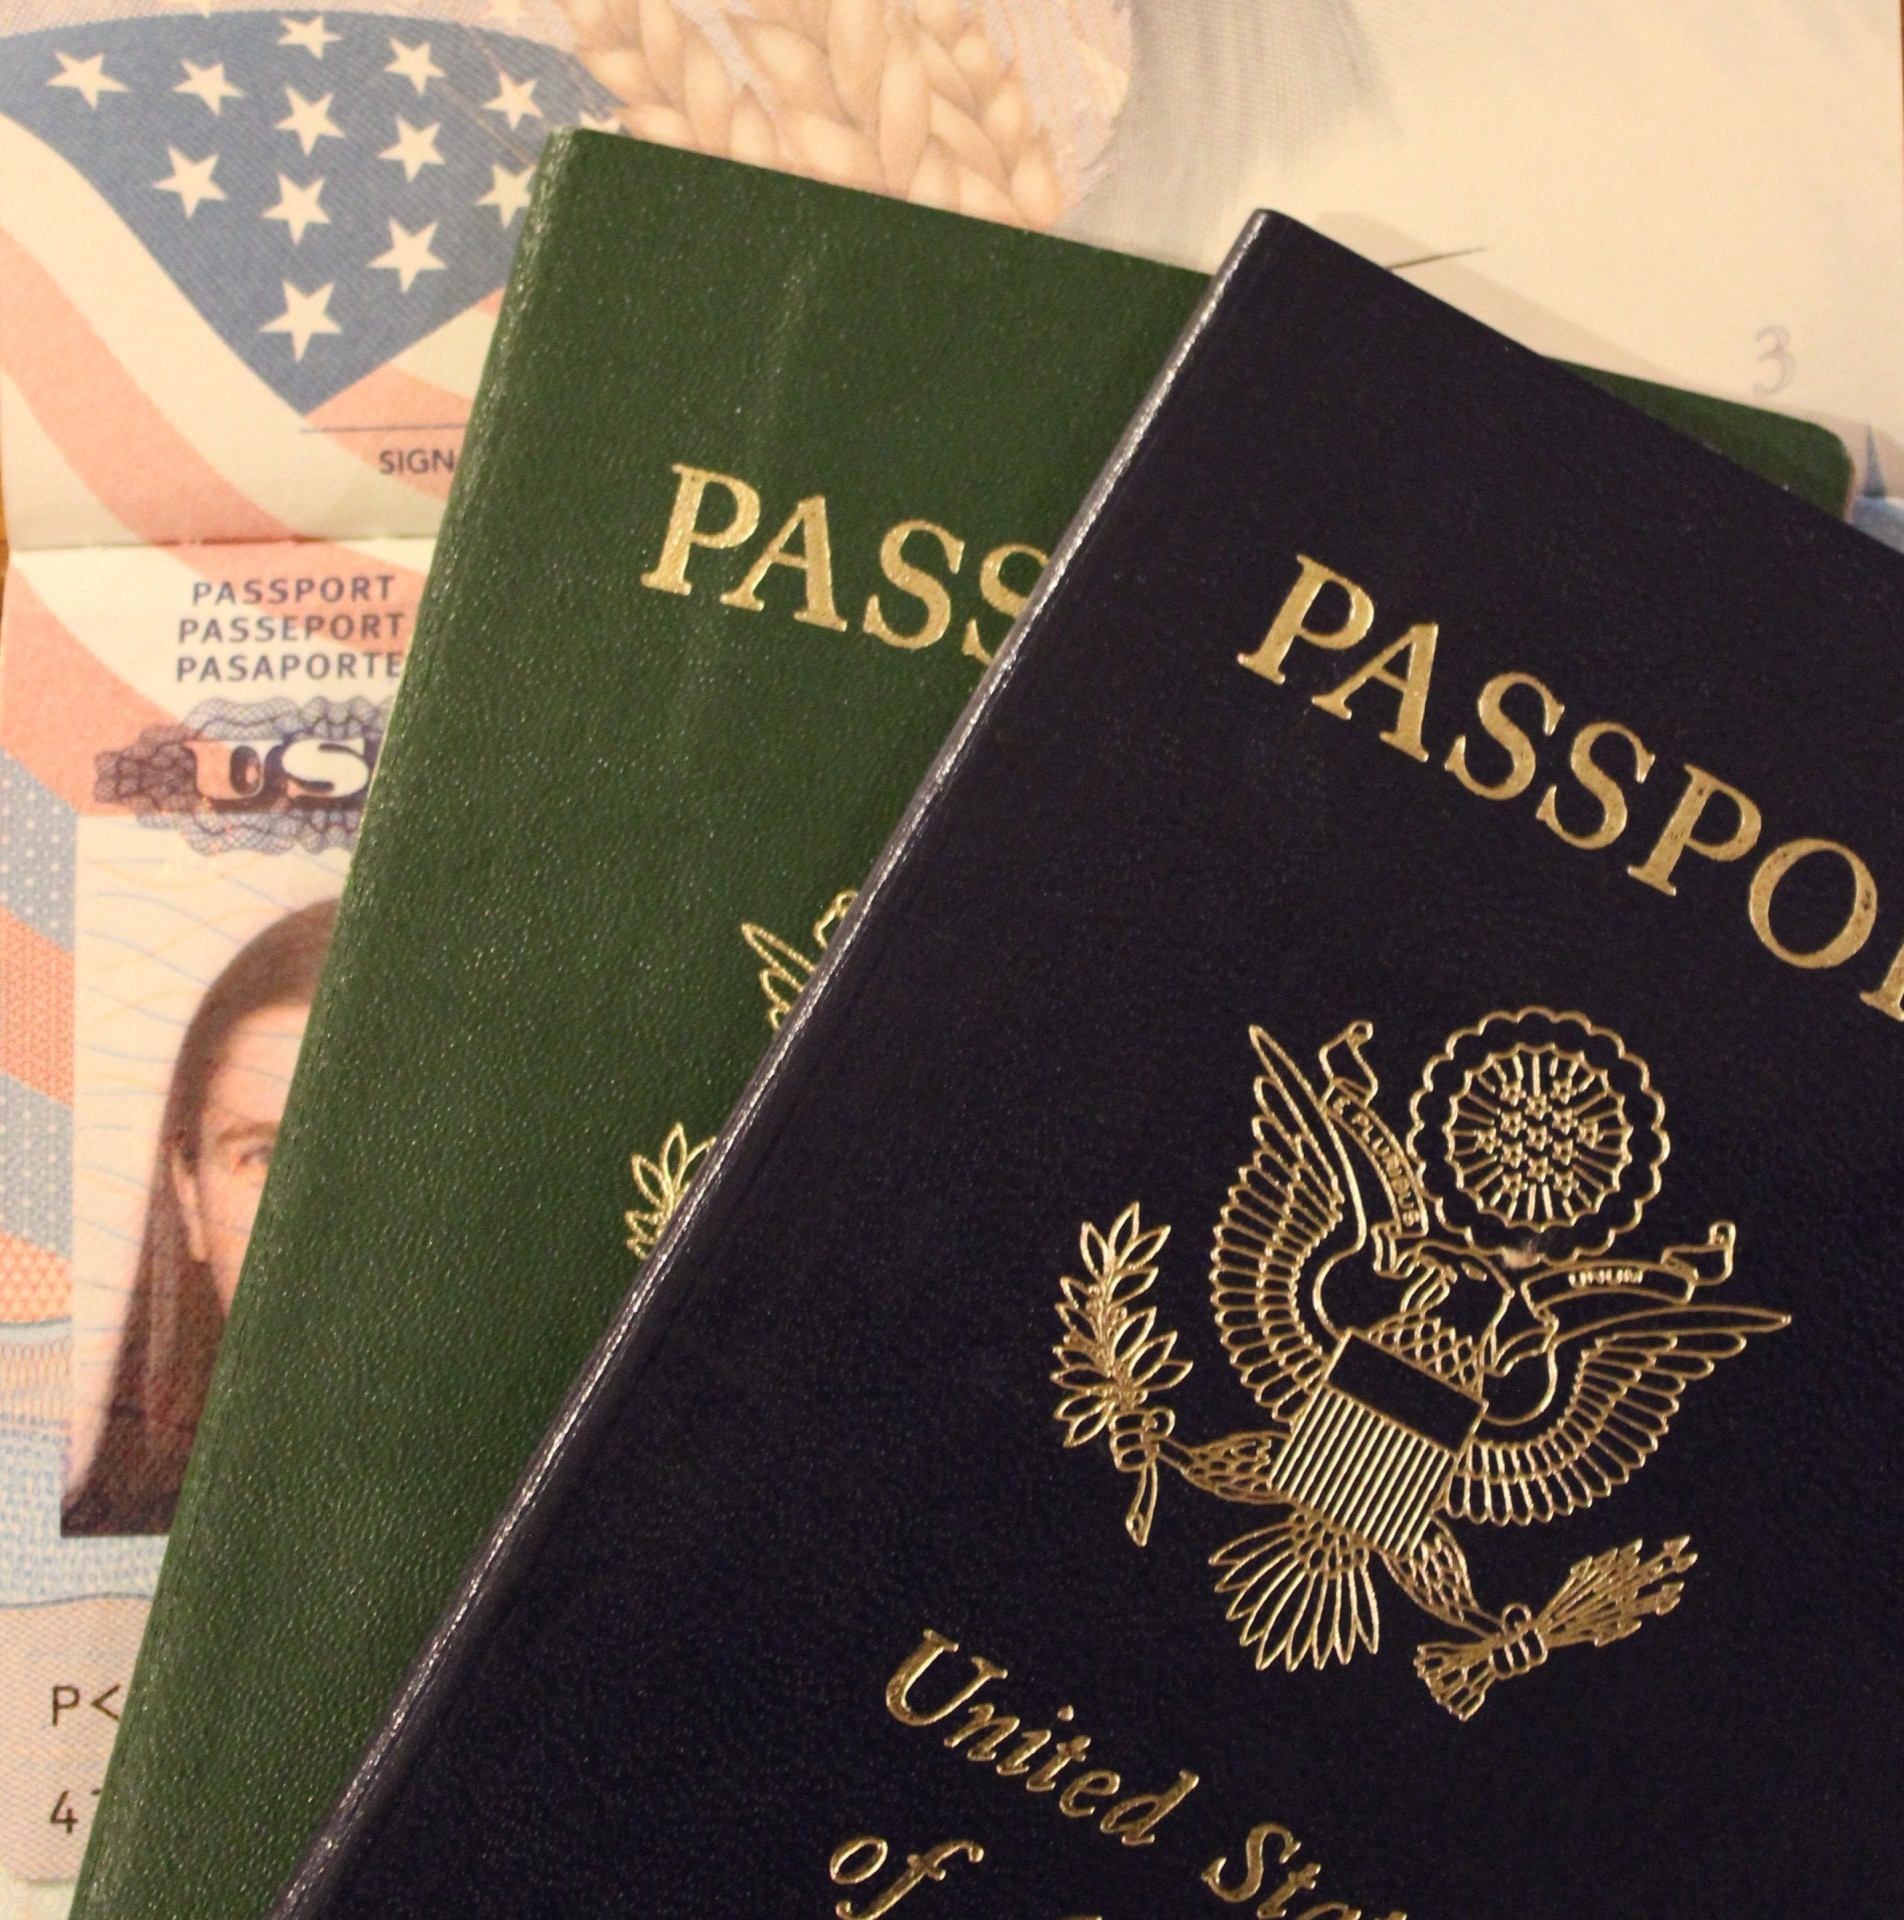 passport united states of america